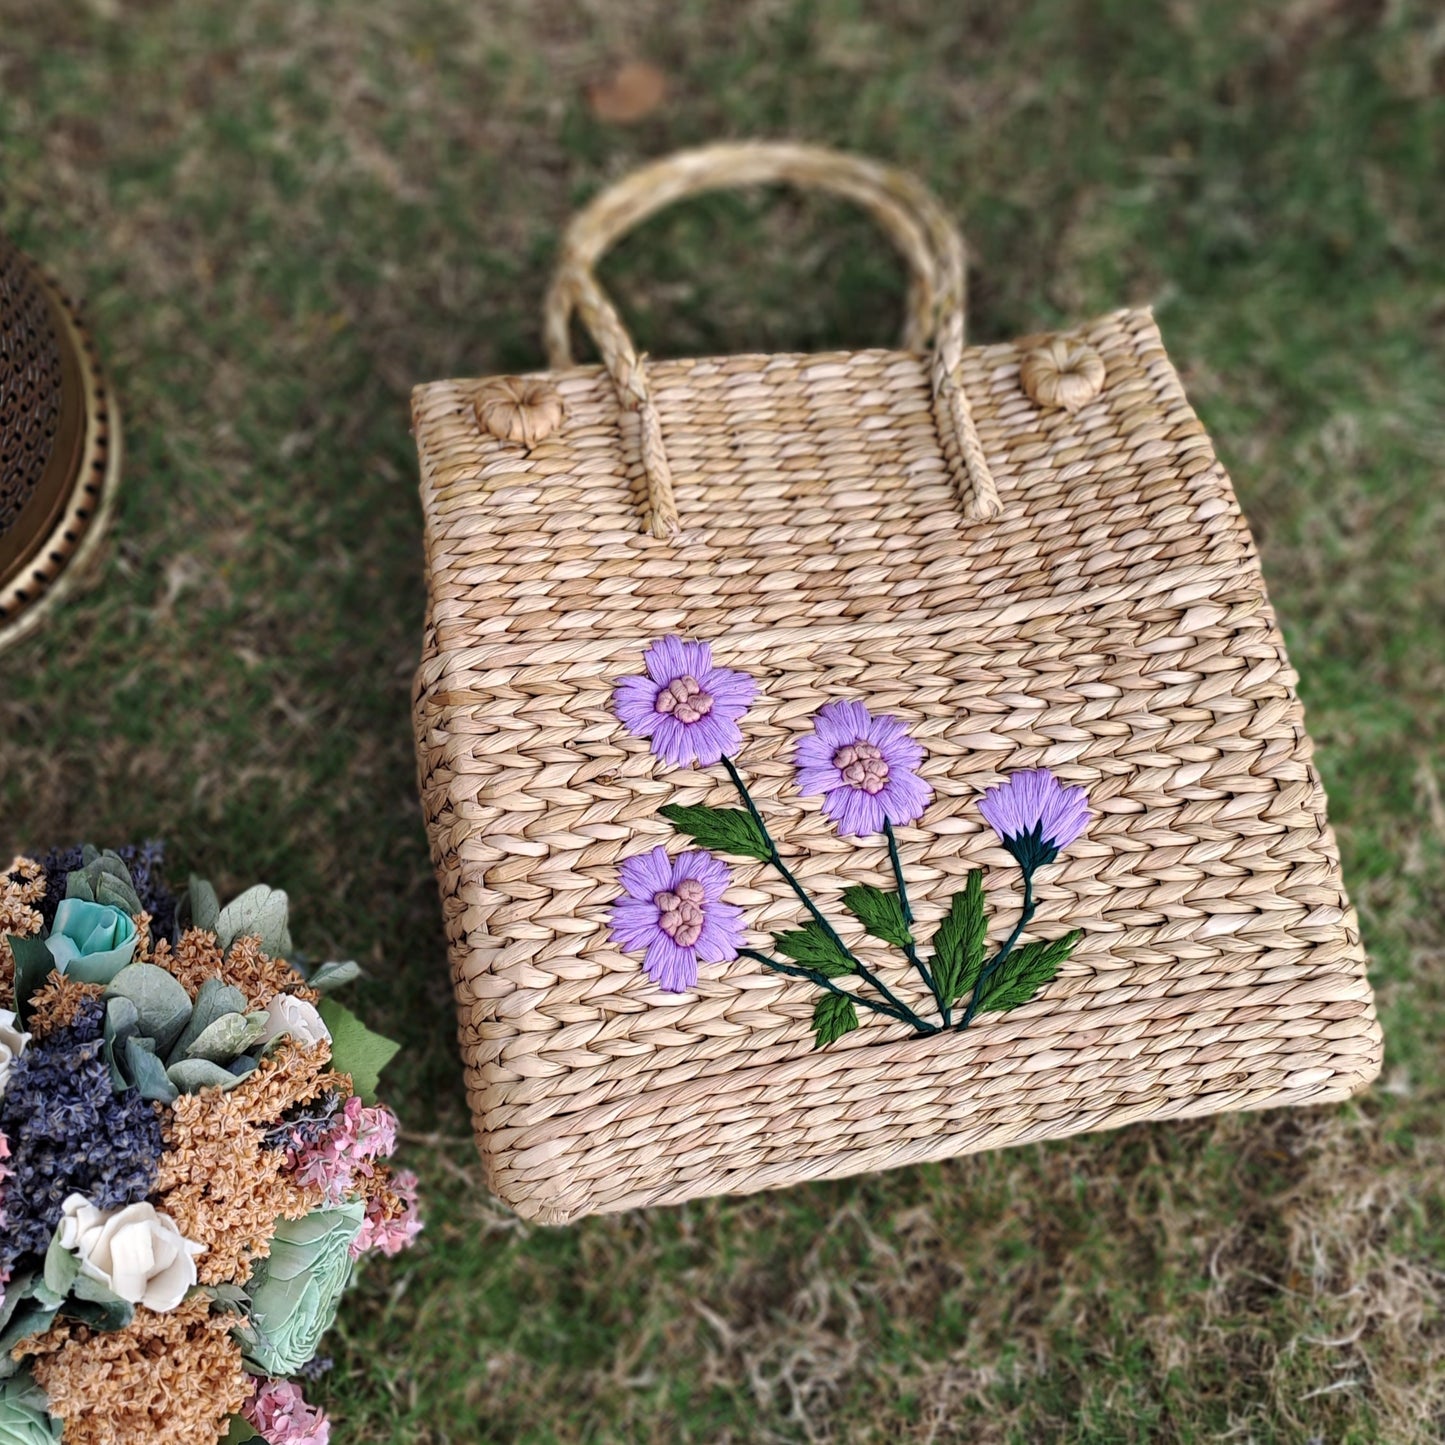 Kauna Grass Bag with hand embroidery design